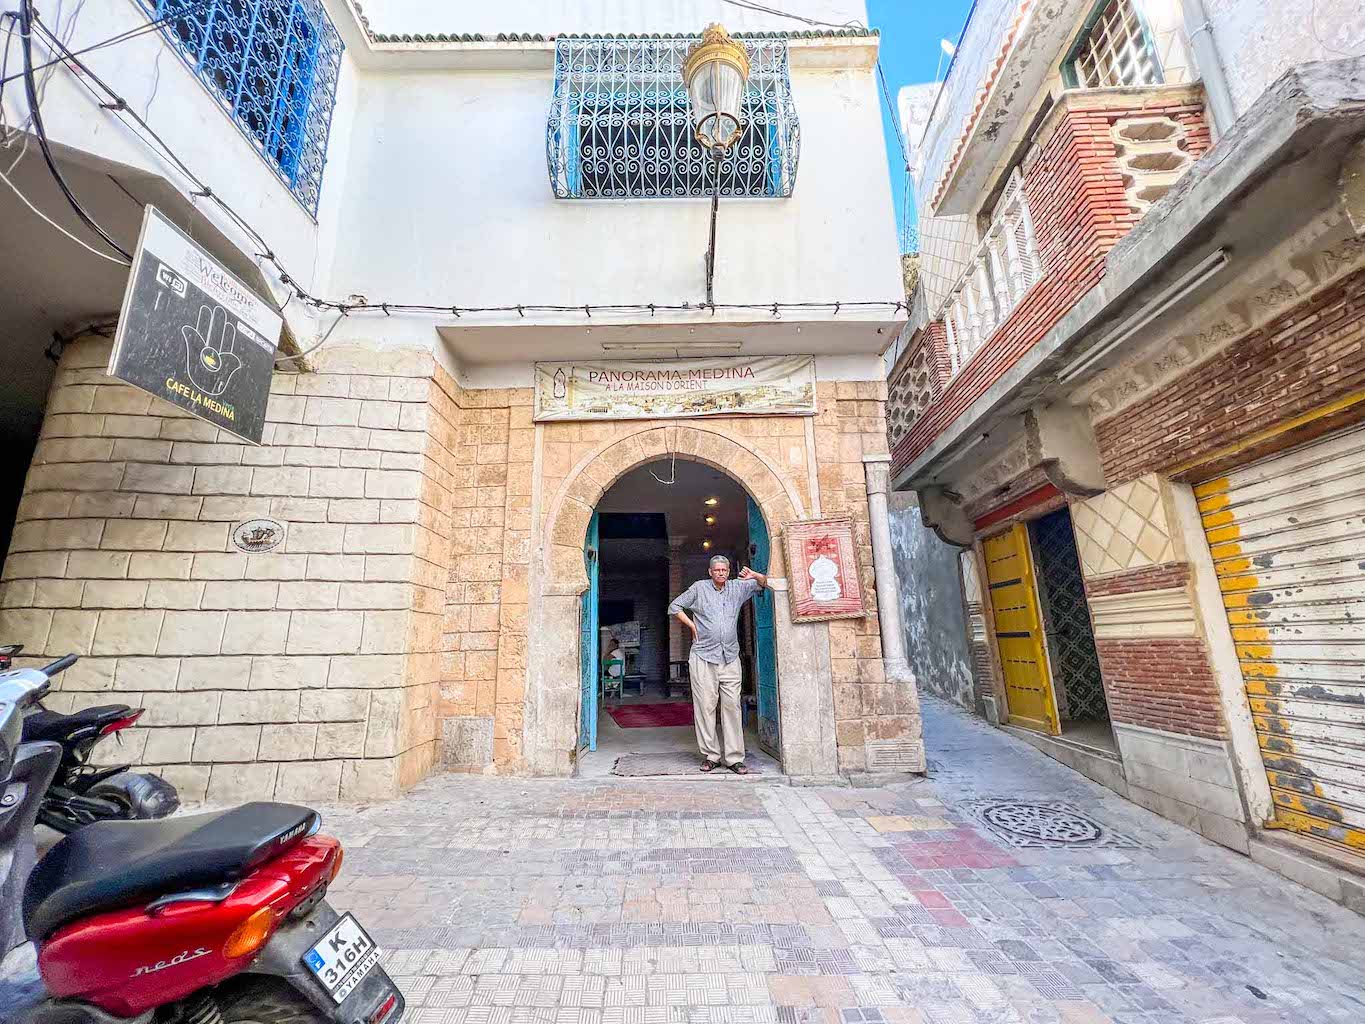 Tunisia itinerary, 3 days in Tunisia, Entrance to Cafe Panorama Tunis Medina